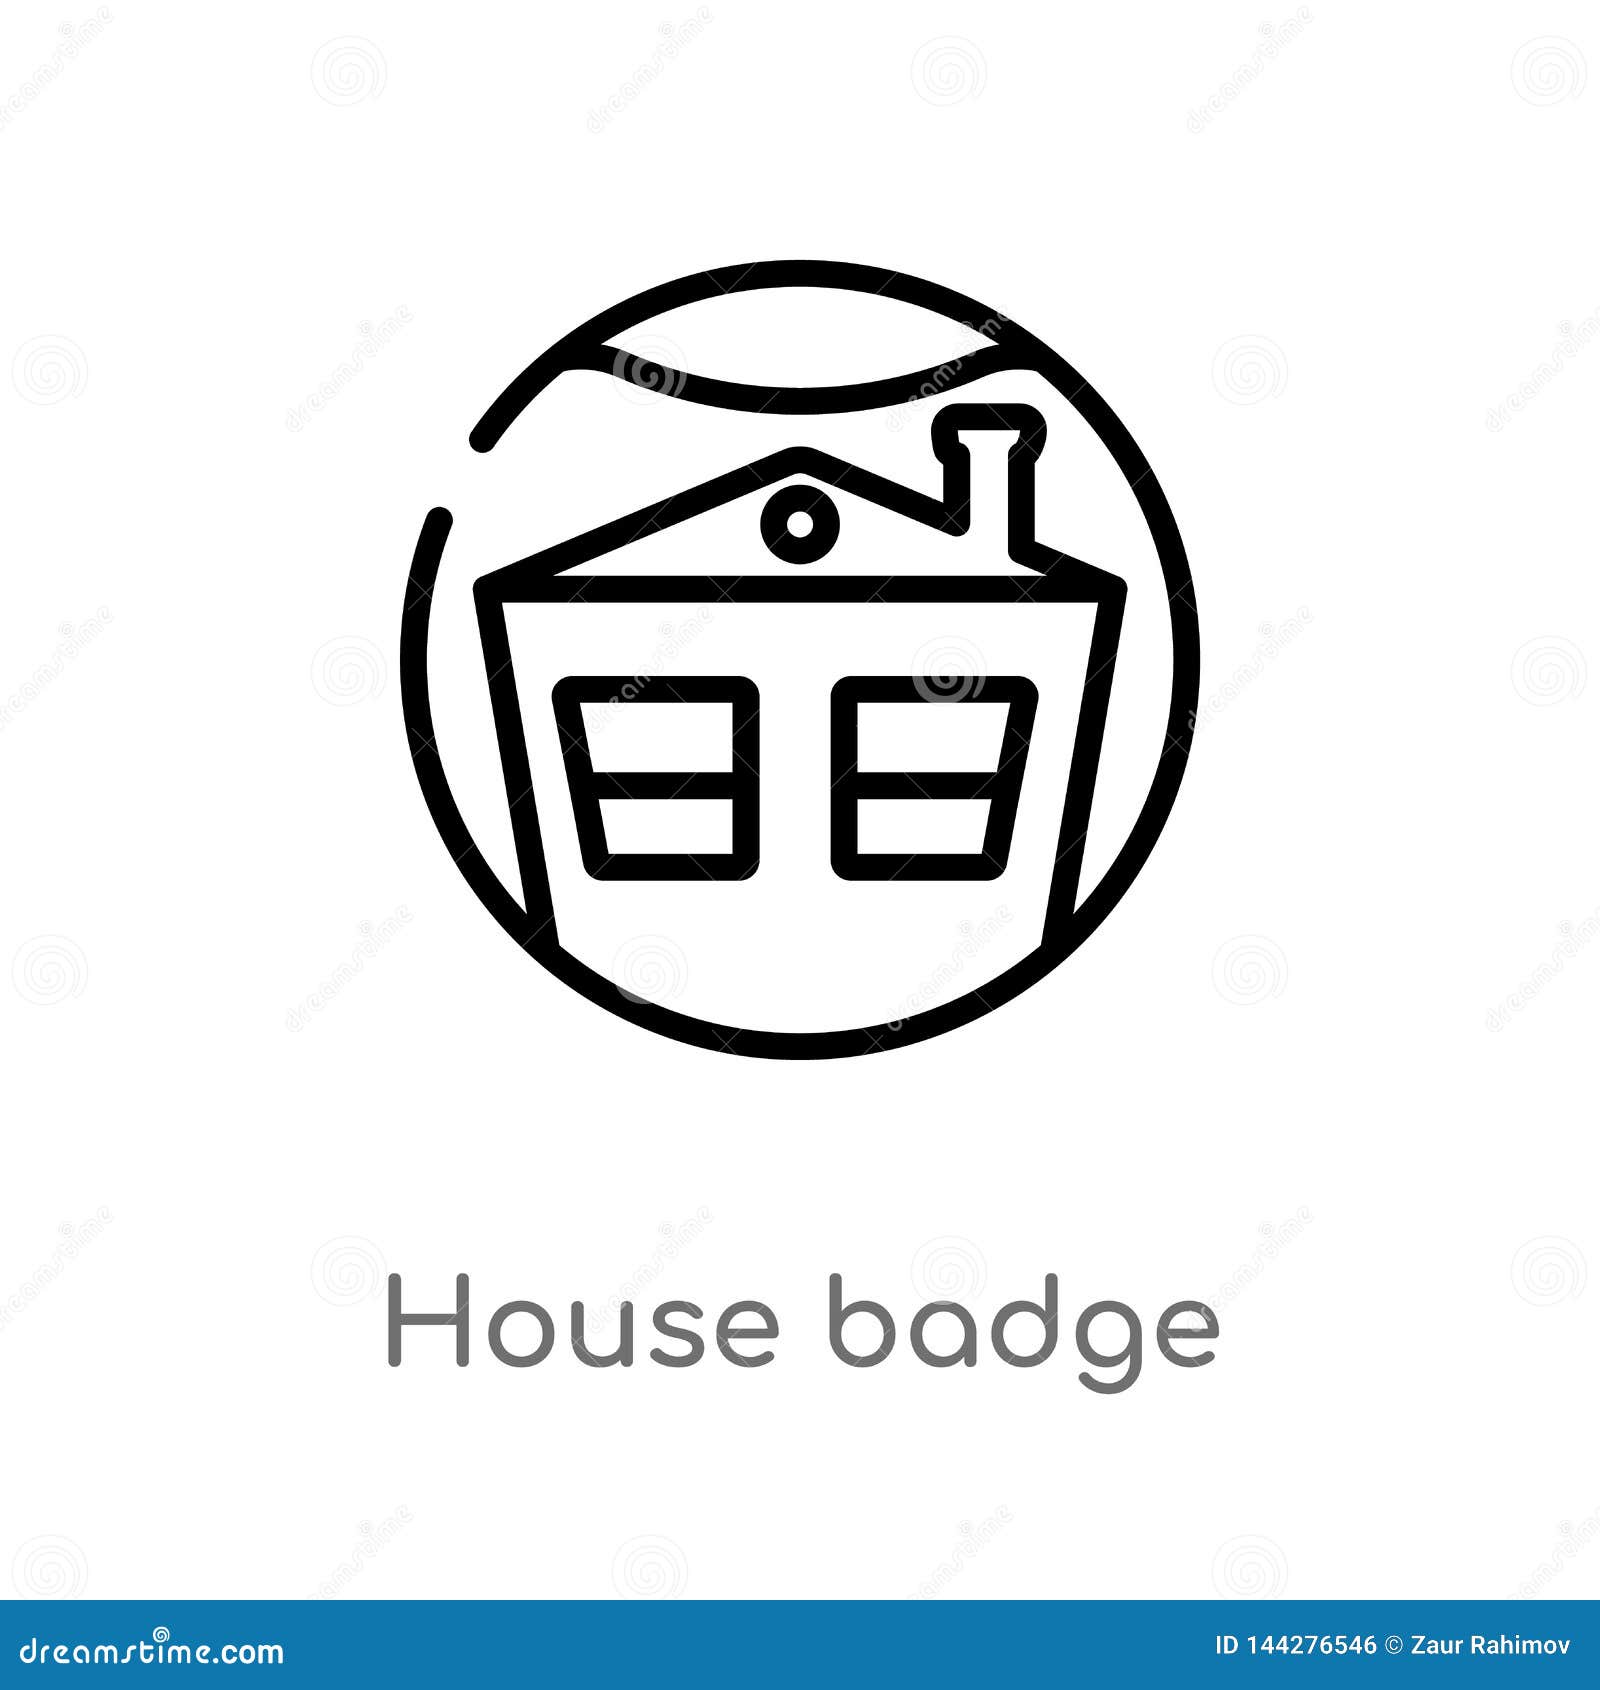 bricksmith badge house